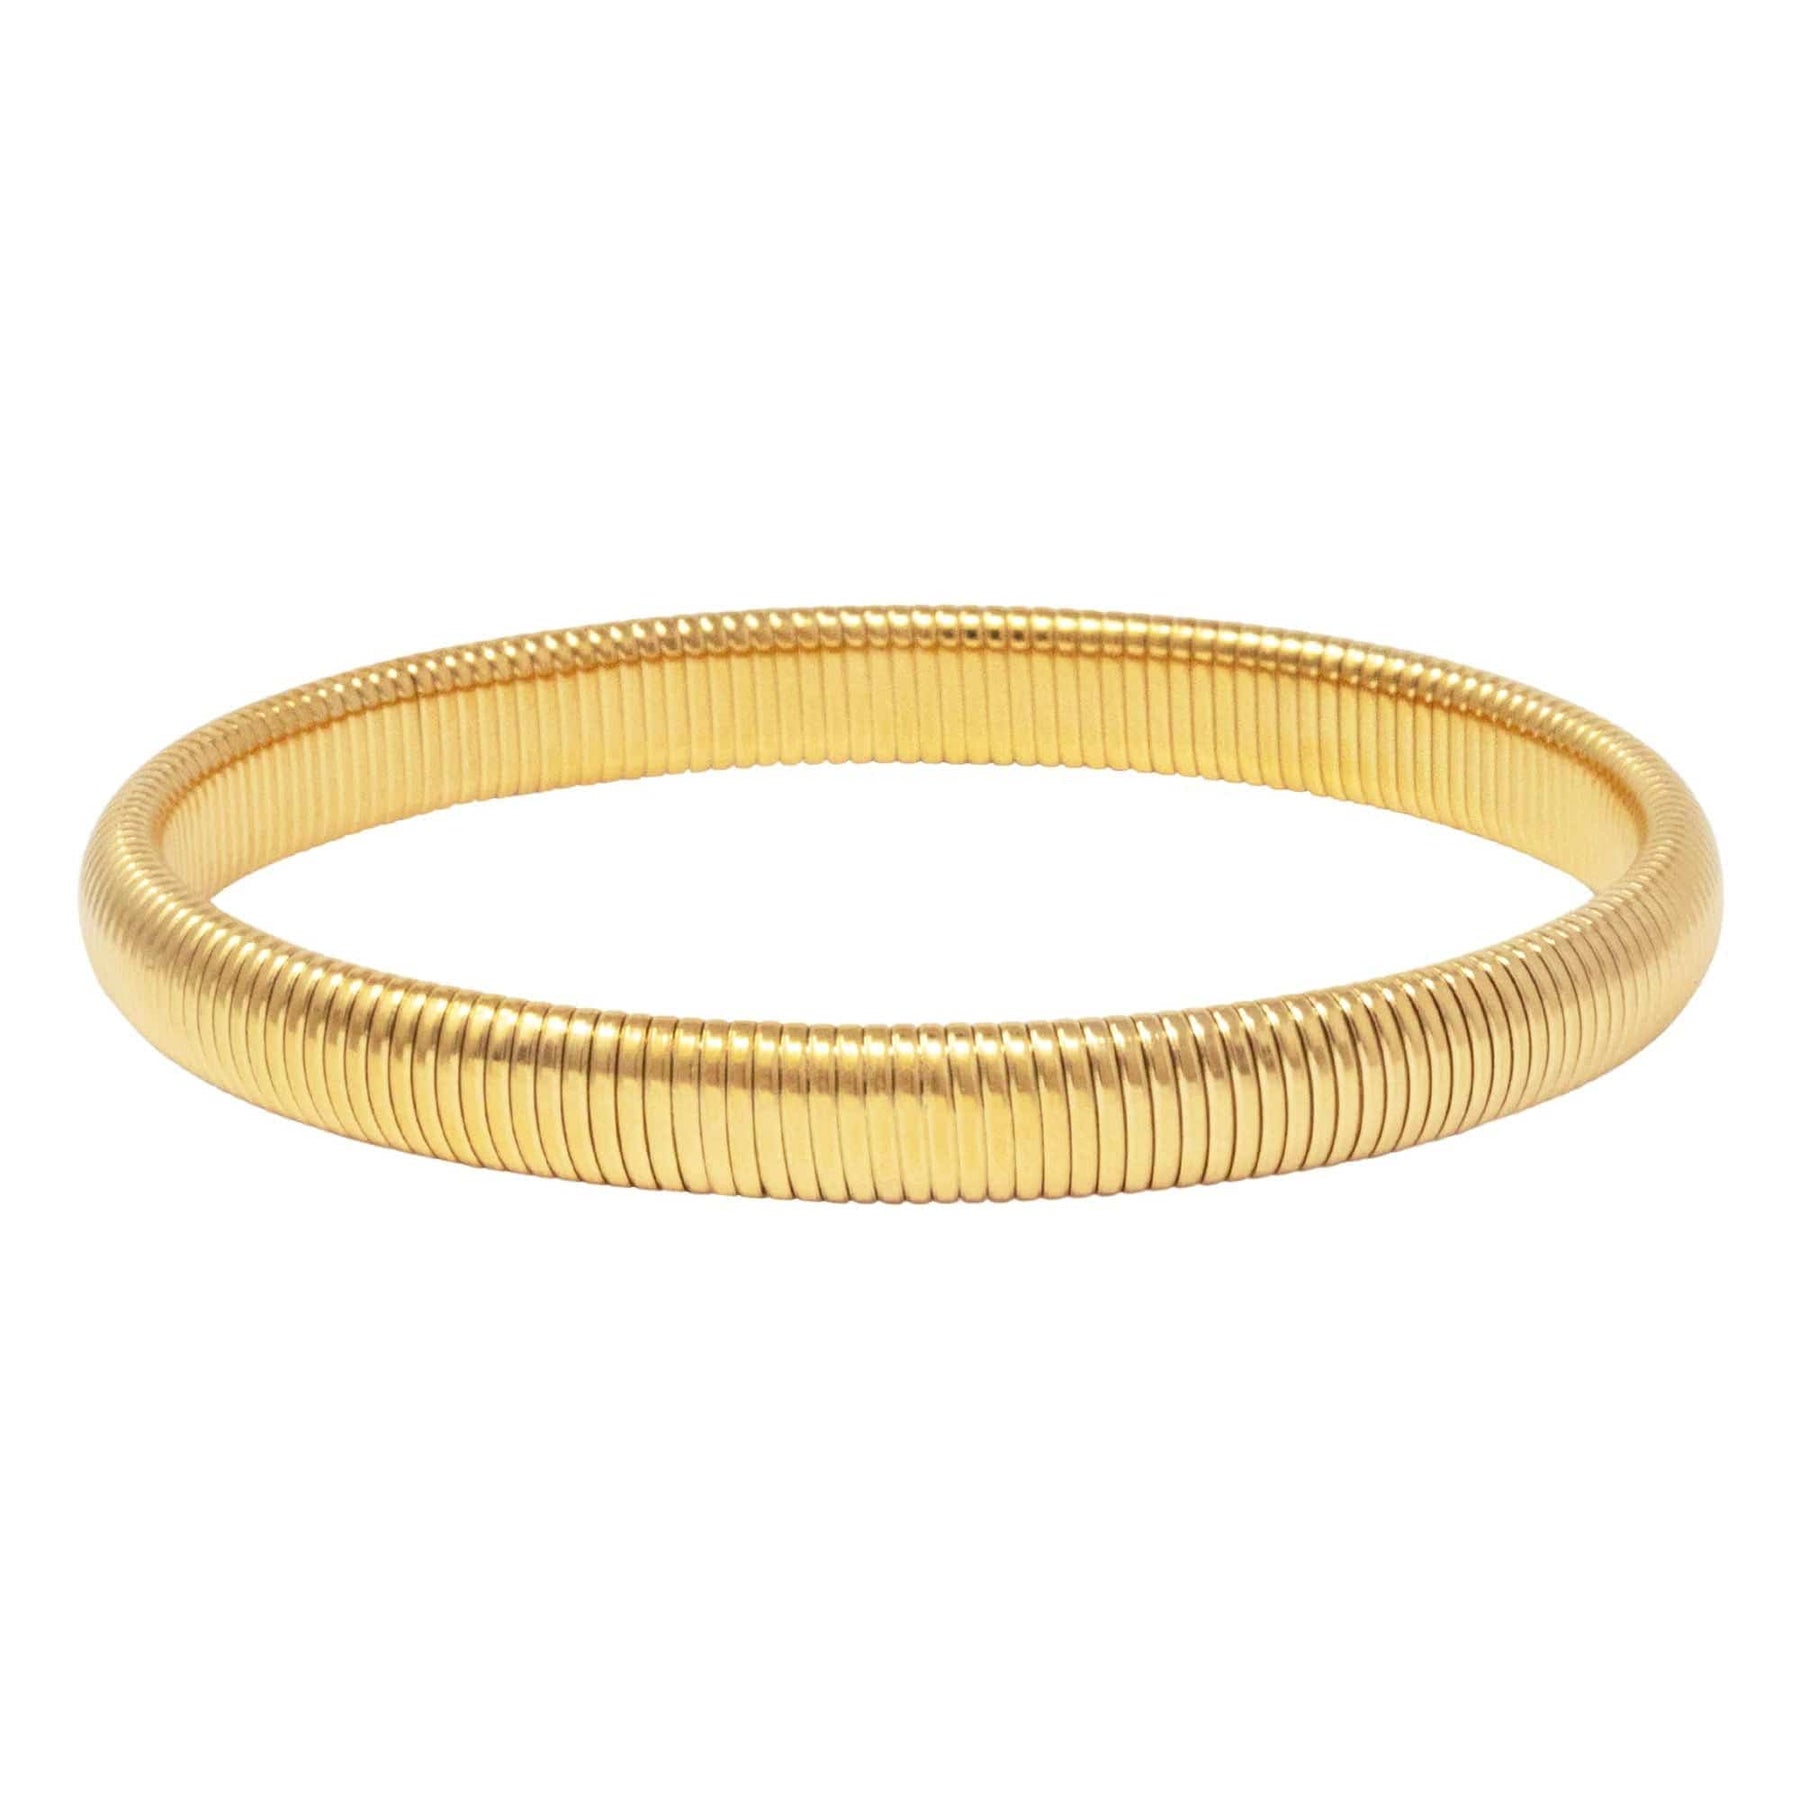 BohoMoon Stainless Steel Flex Bracelet Small Gold